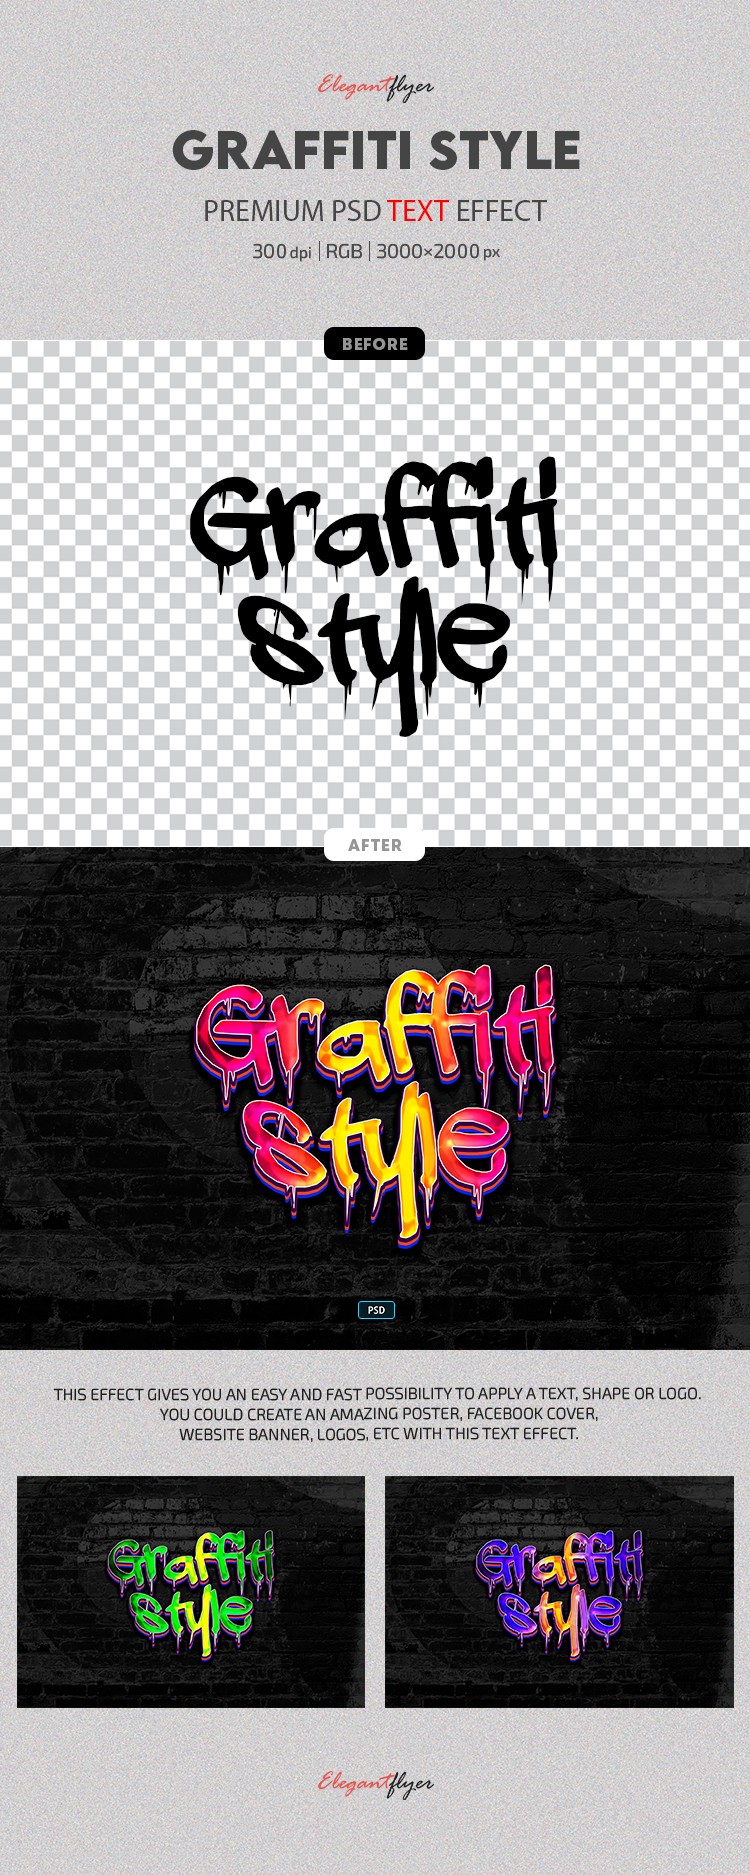 Graffiti Style Text Effect by ElegantFlyer